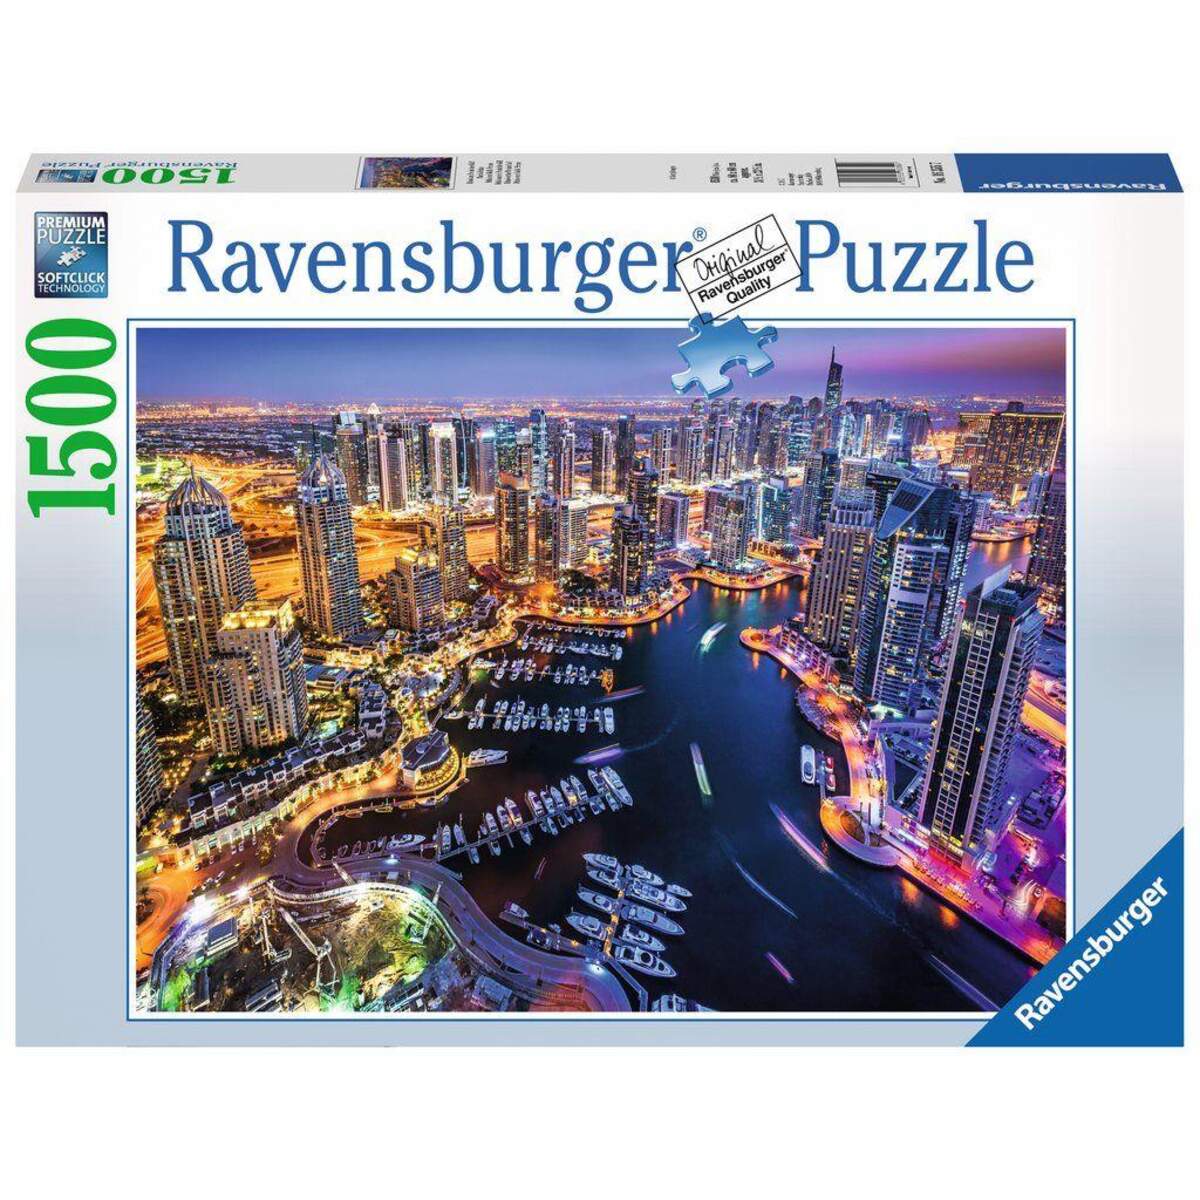 Ravensburger Puzzle Dubai am Persischen Golf, 1500 Teile